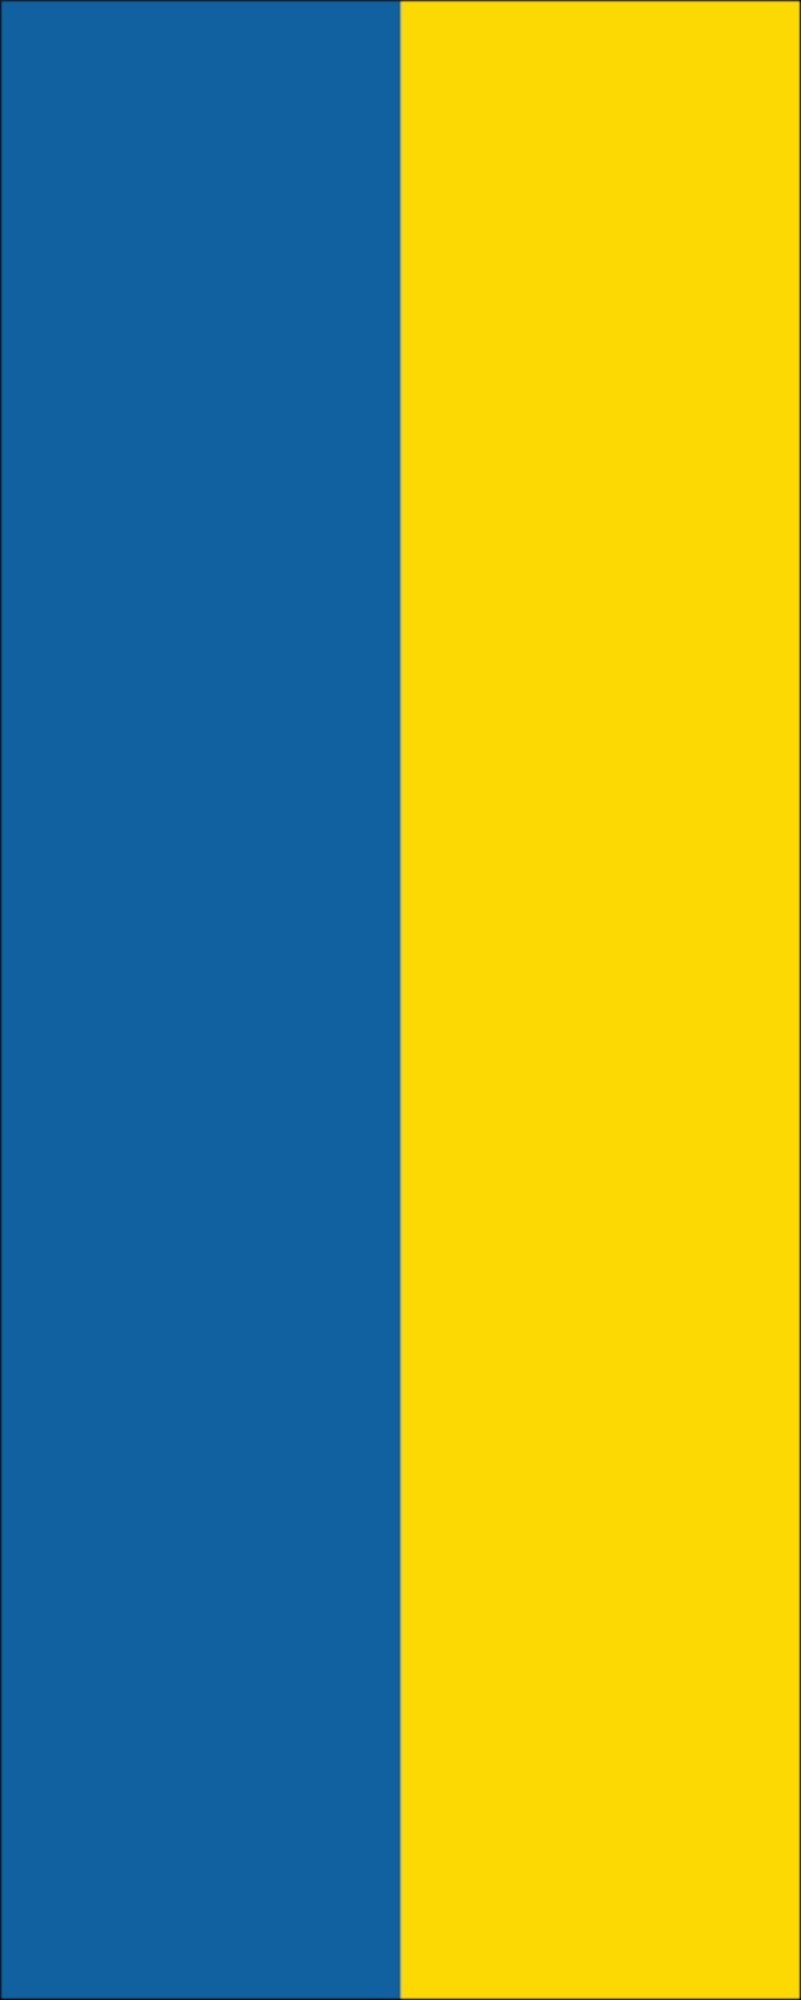 Flagge 110 flaggenmeer Ukraine g/m² Flagge Hochformat